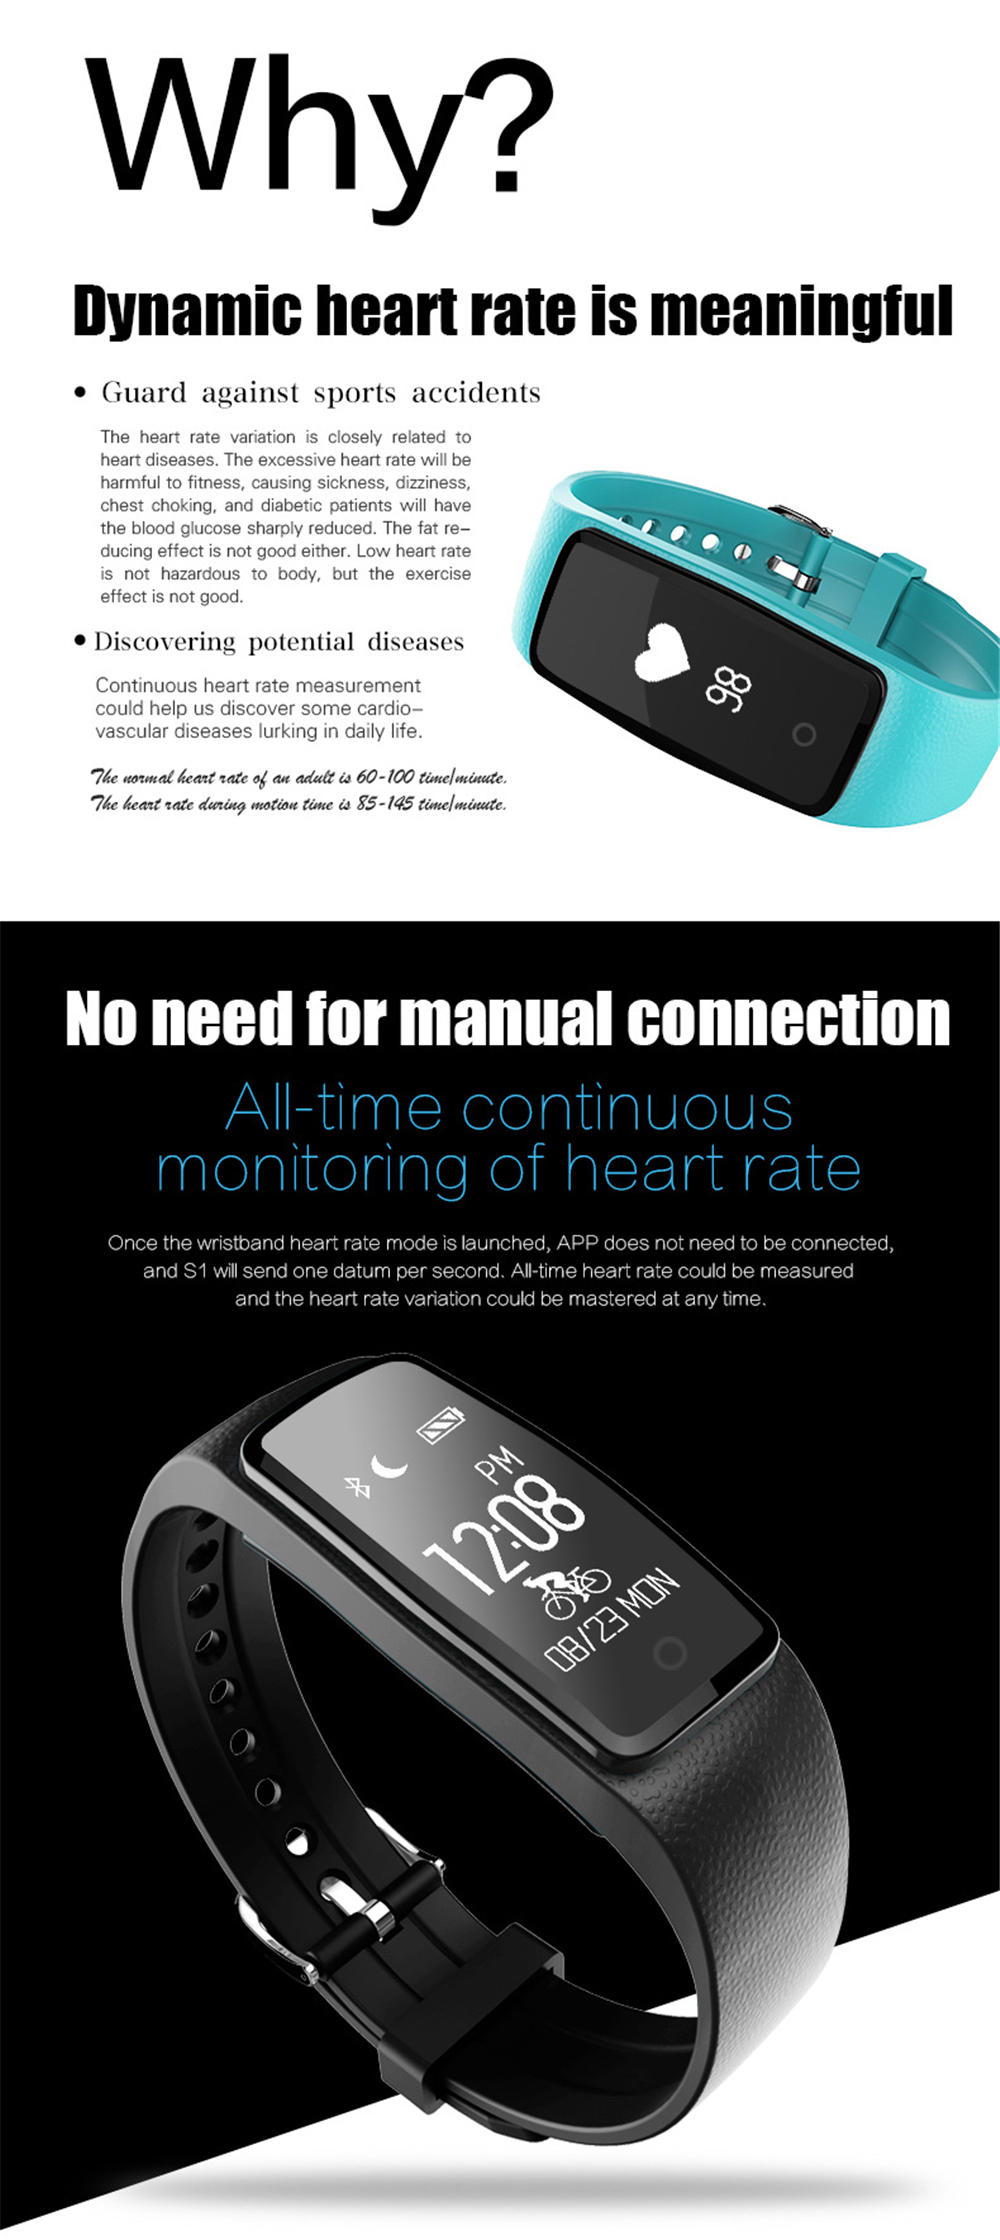 LEMFO S1 intelligent health monitoring remote-controlled camera sports bracelet